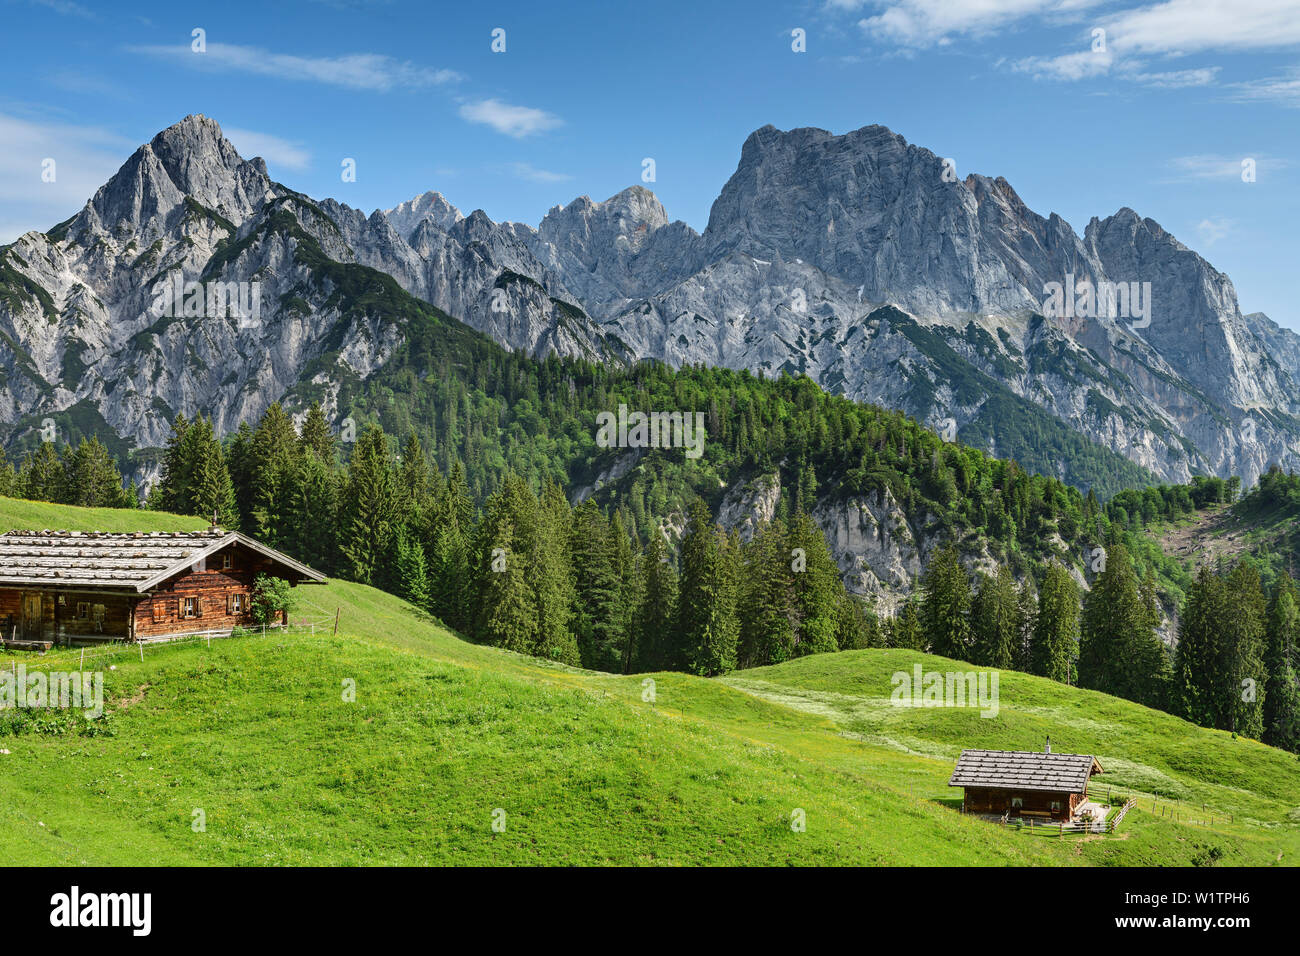 Two alpine huts with rock summits of Reiteralm in background, Berchtesgaden Alps, Salzburg, Austria Stock Photo